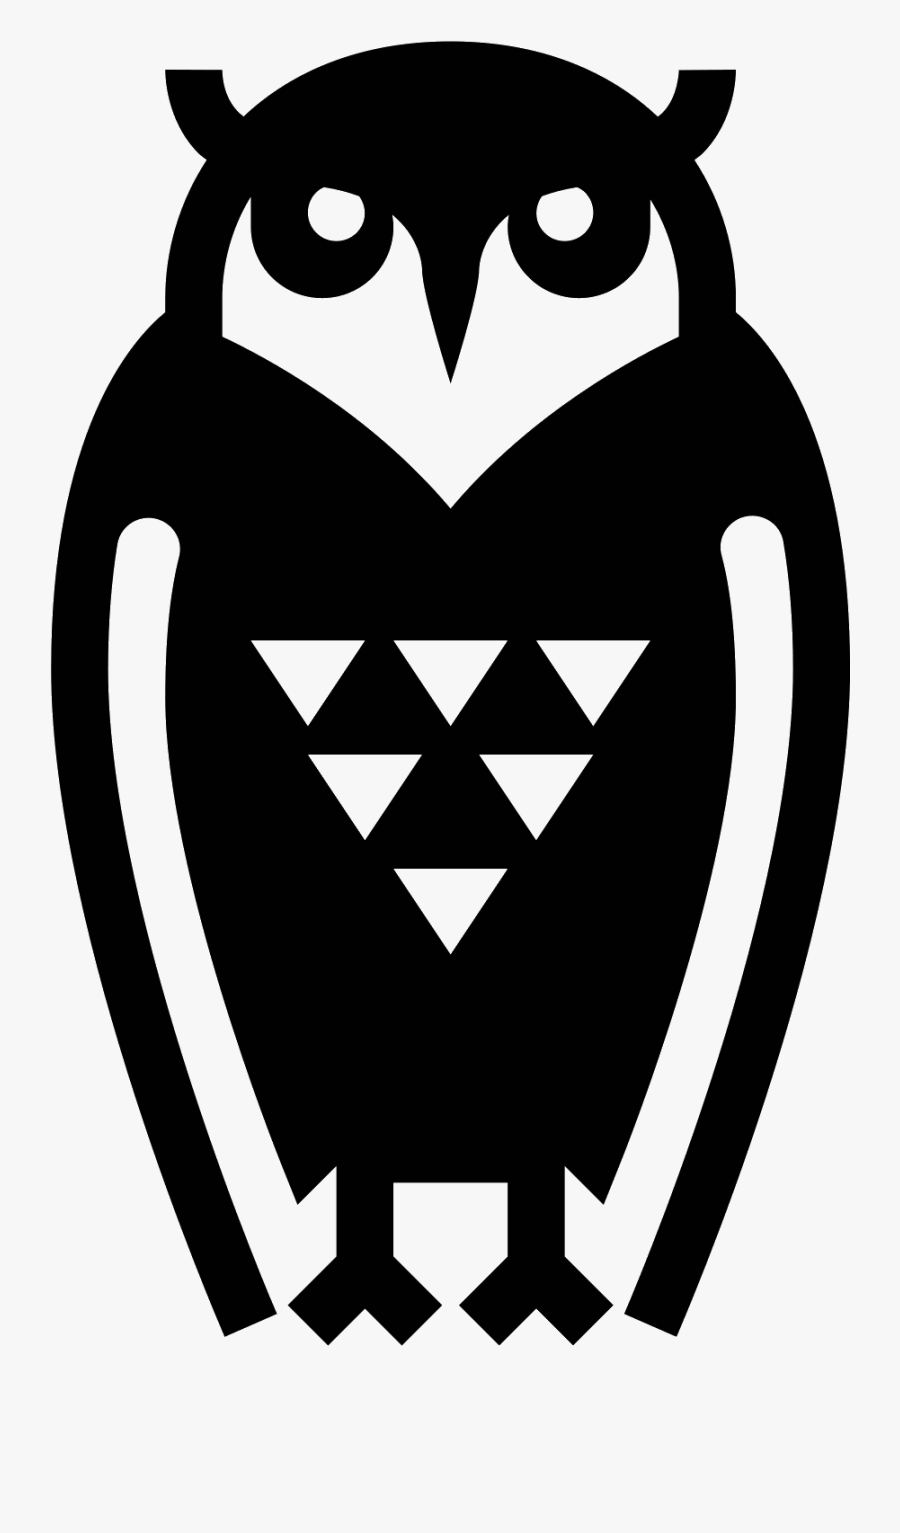 Transparent Owl Clipart Black And White - Black Transparent Owl Icon, Transparent Clipart